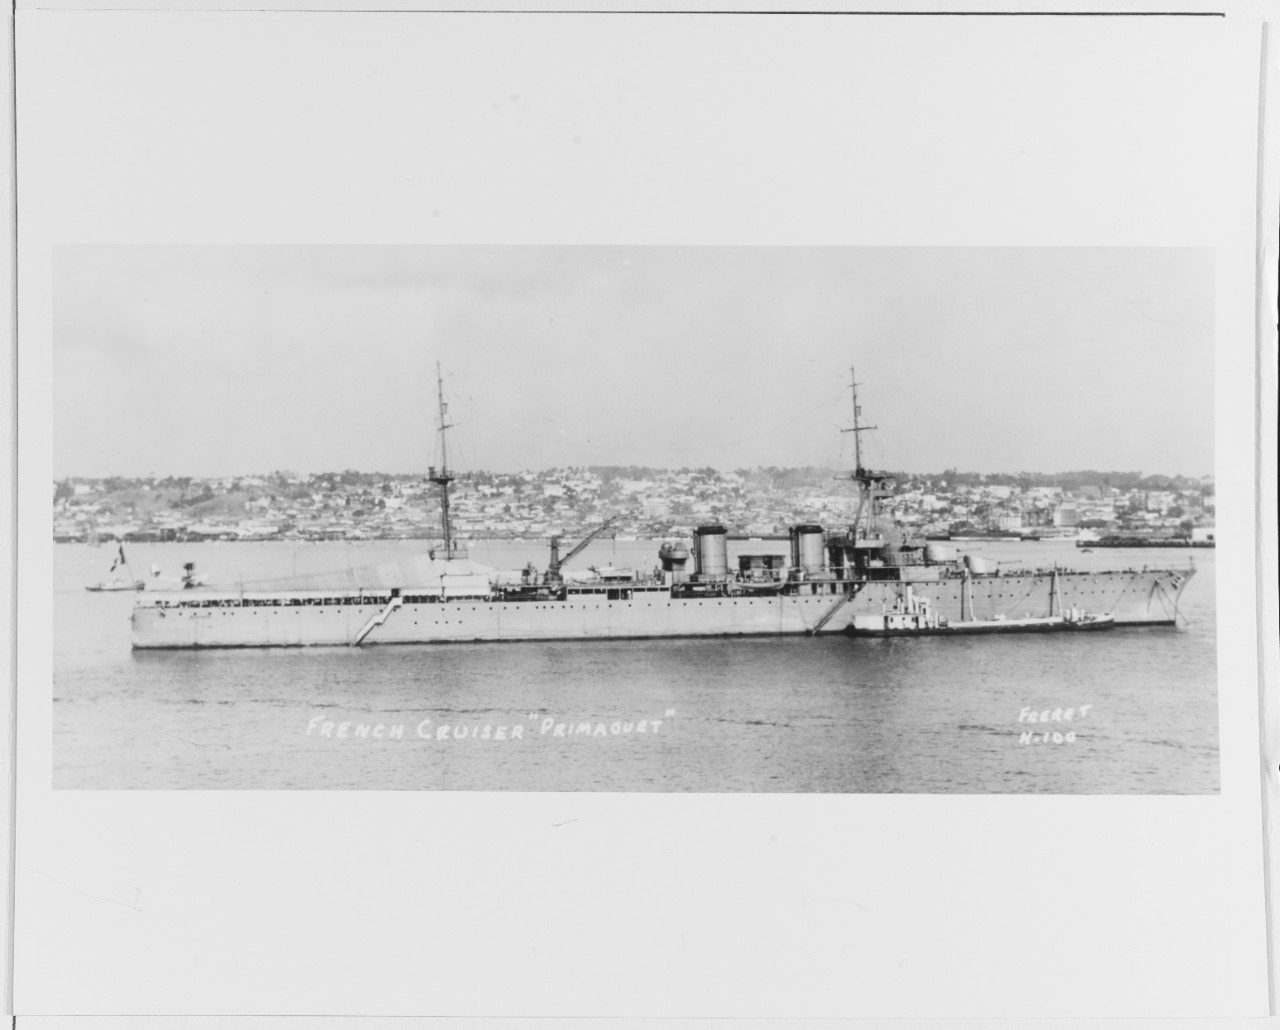 PRIMAOUET (French cruiser)Circa 1920s.